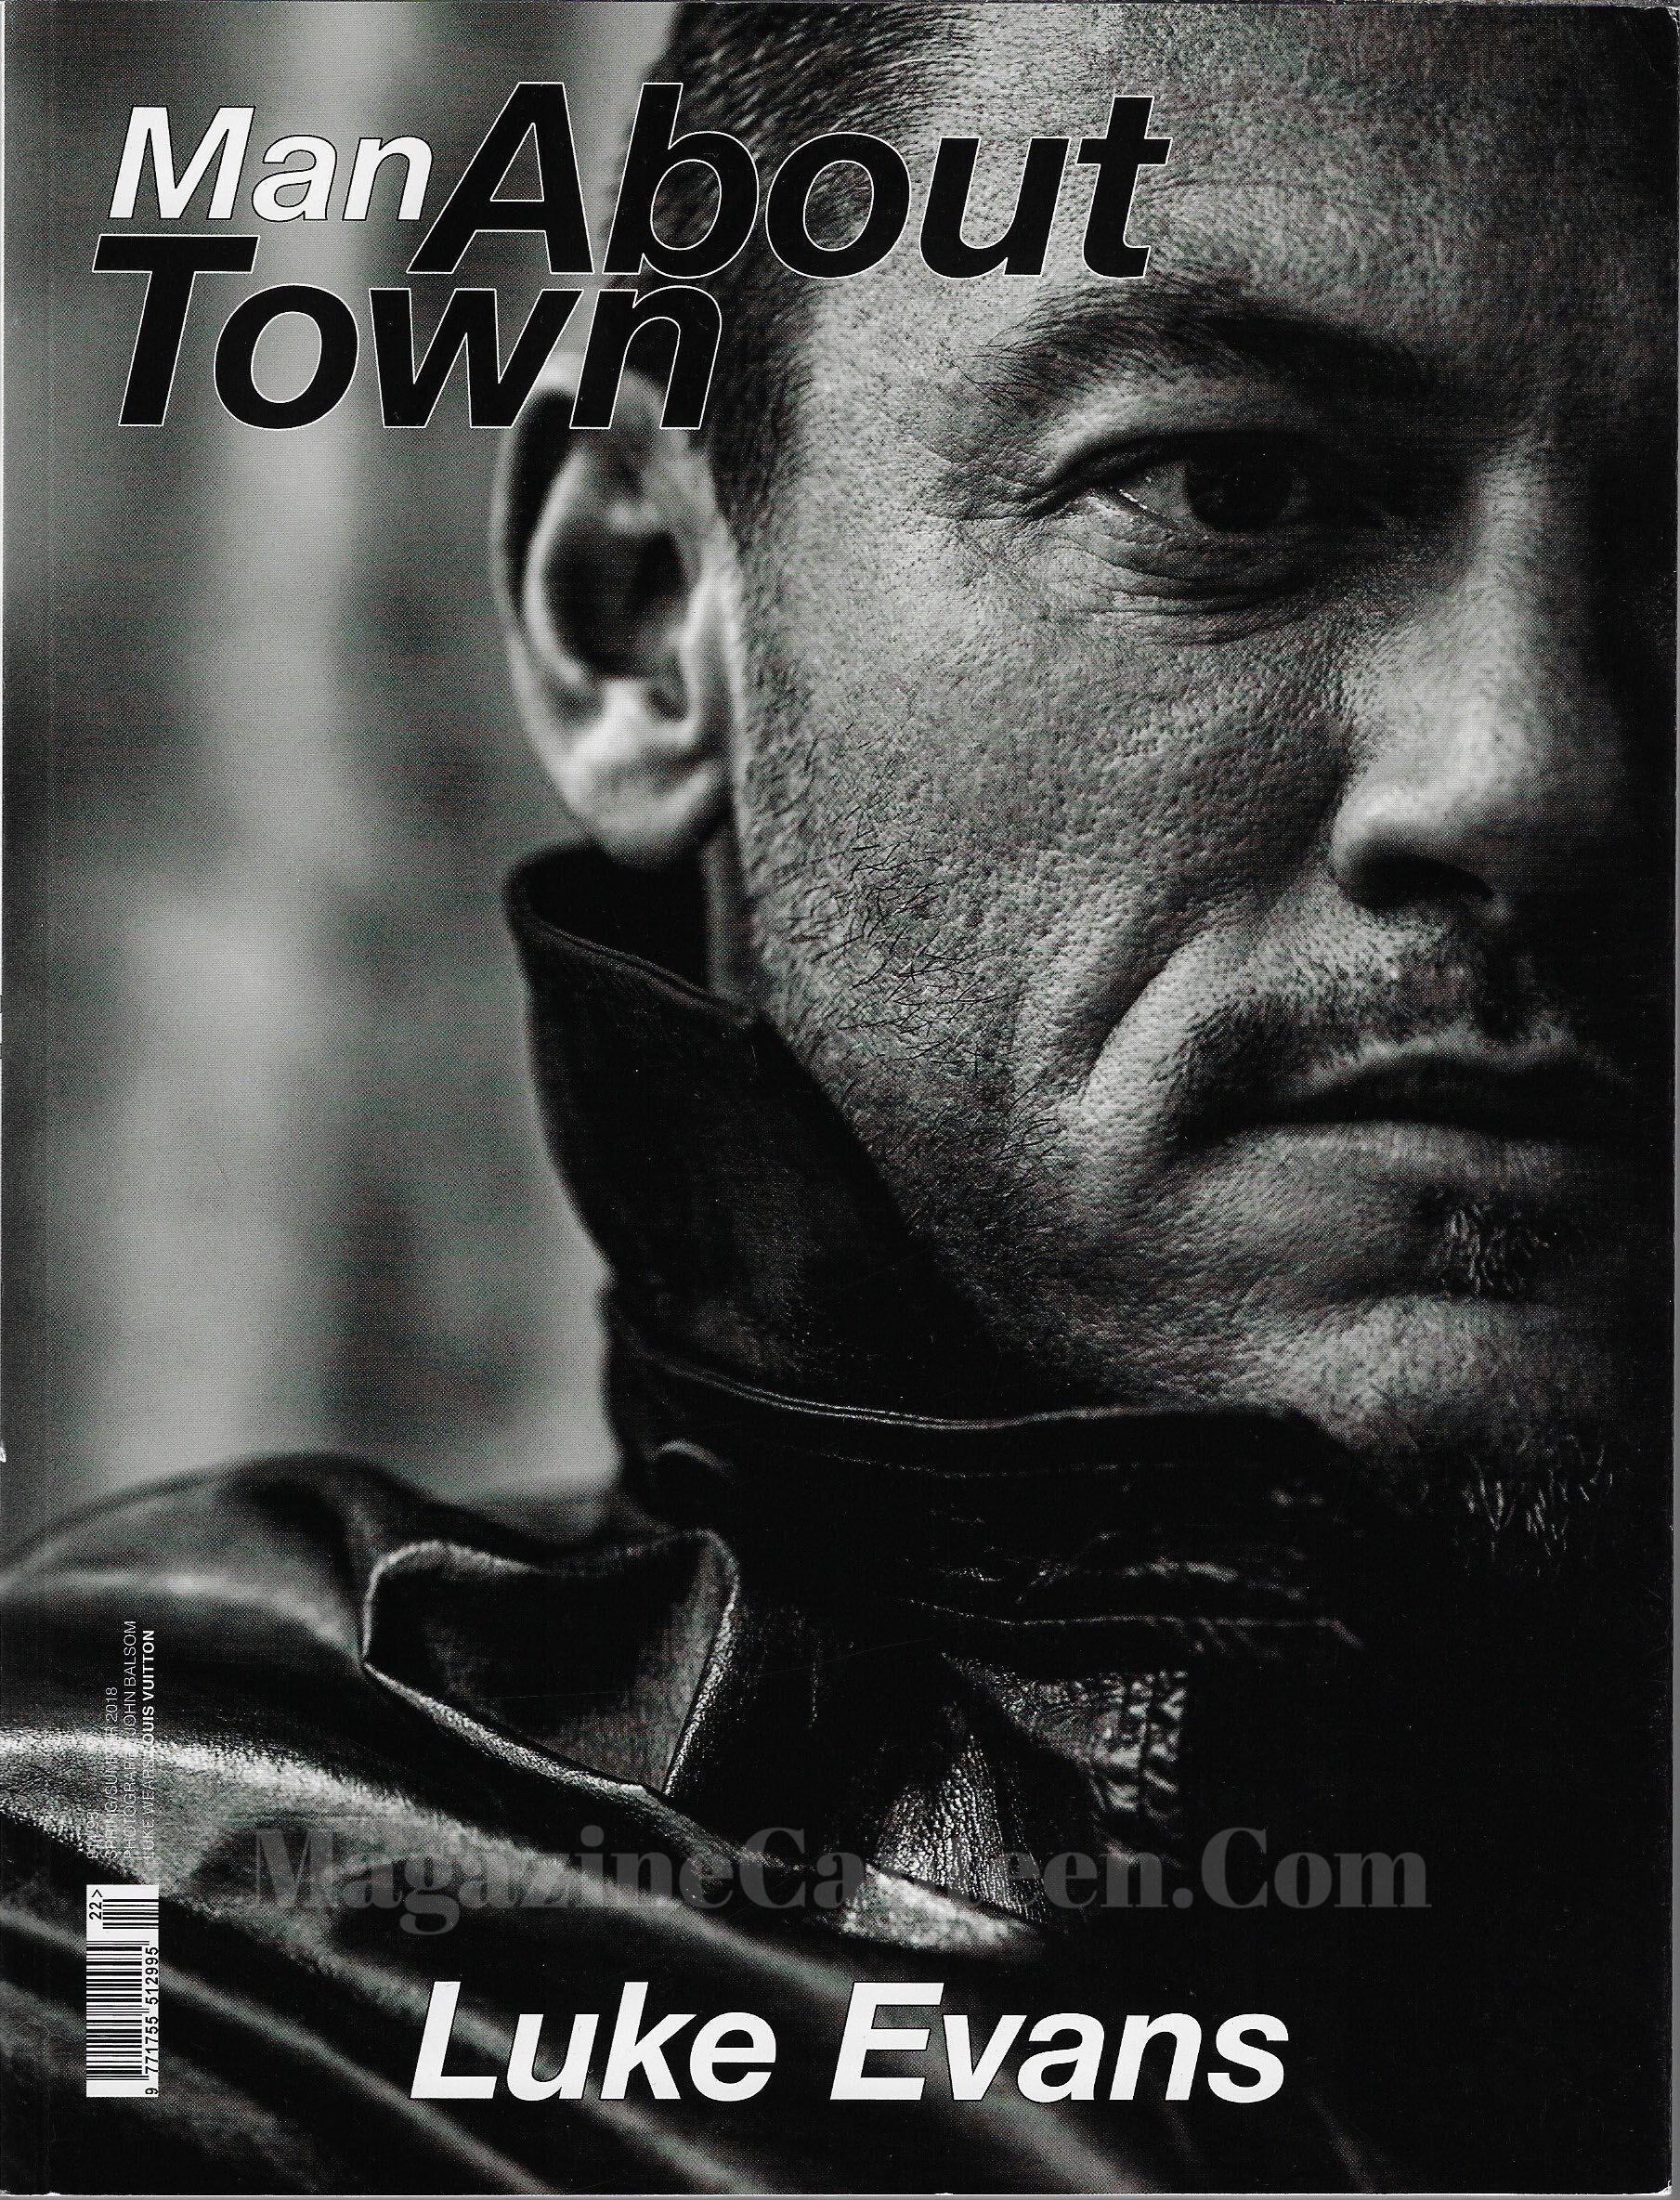 Man About Town Magazine - Luke Evans 2018